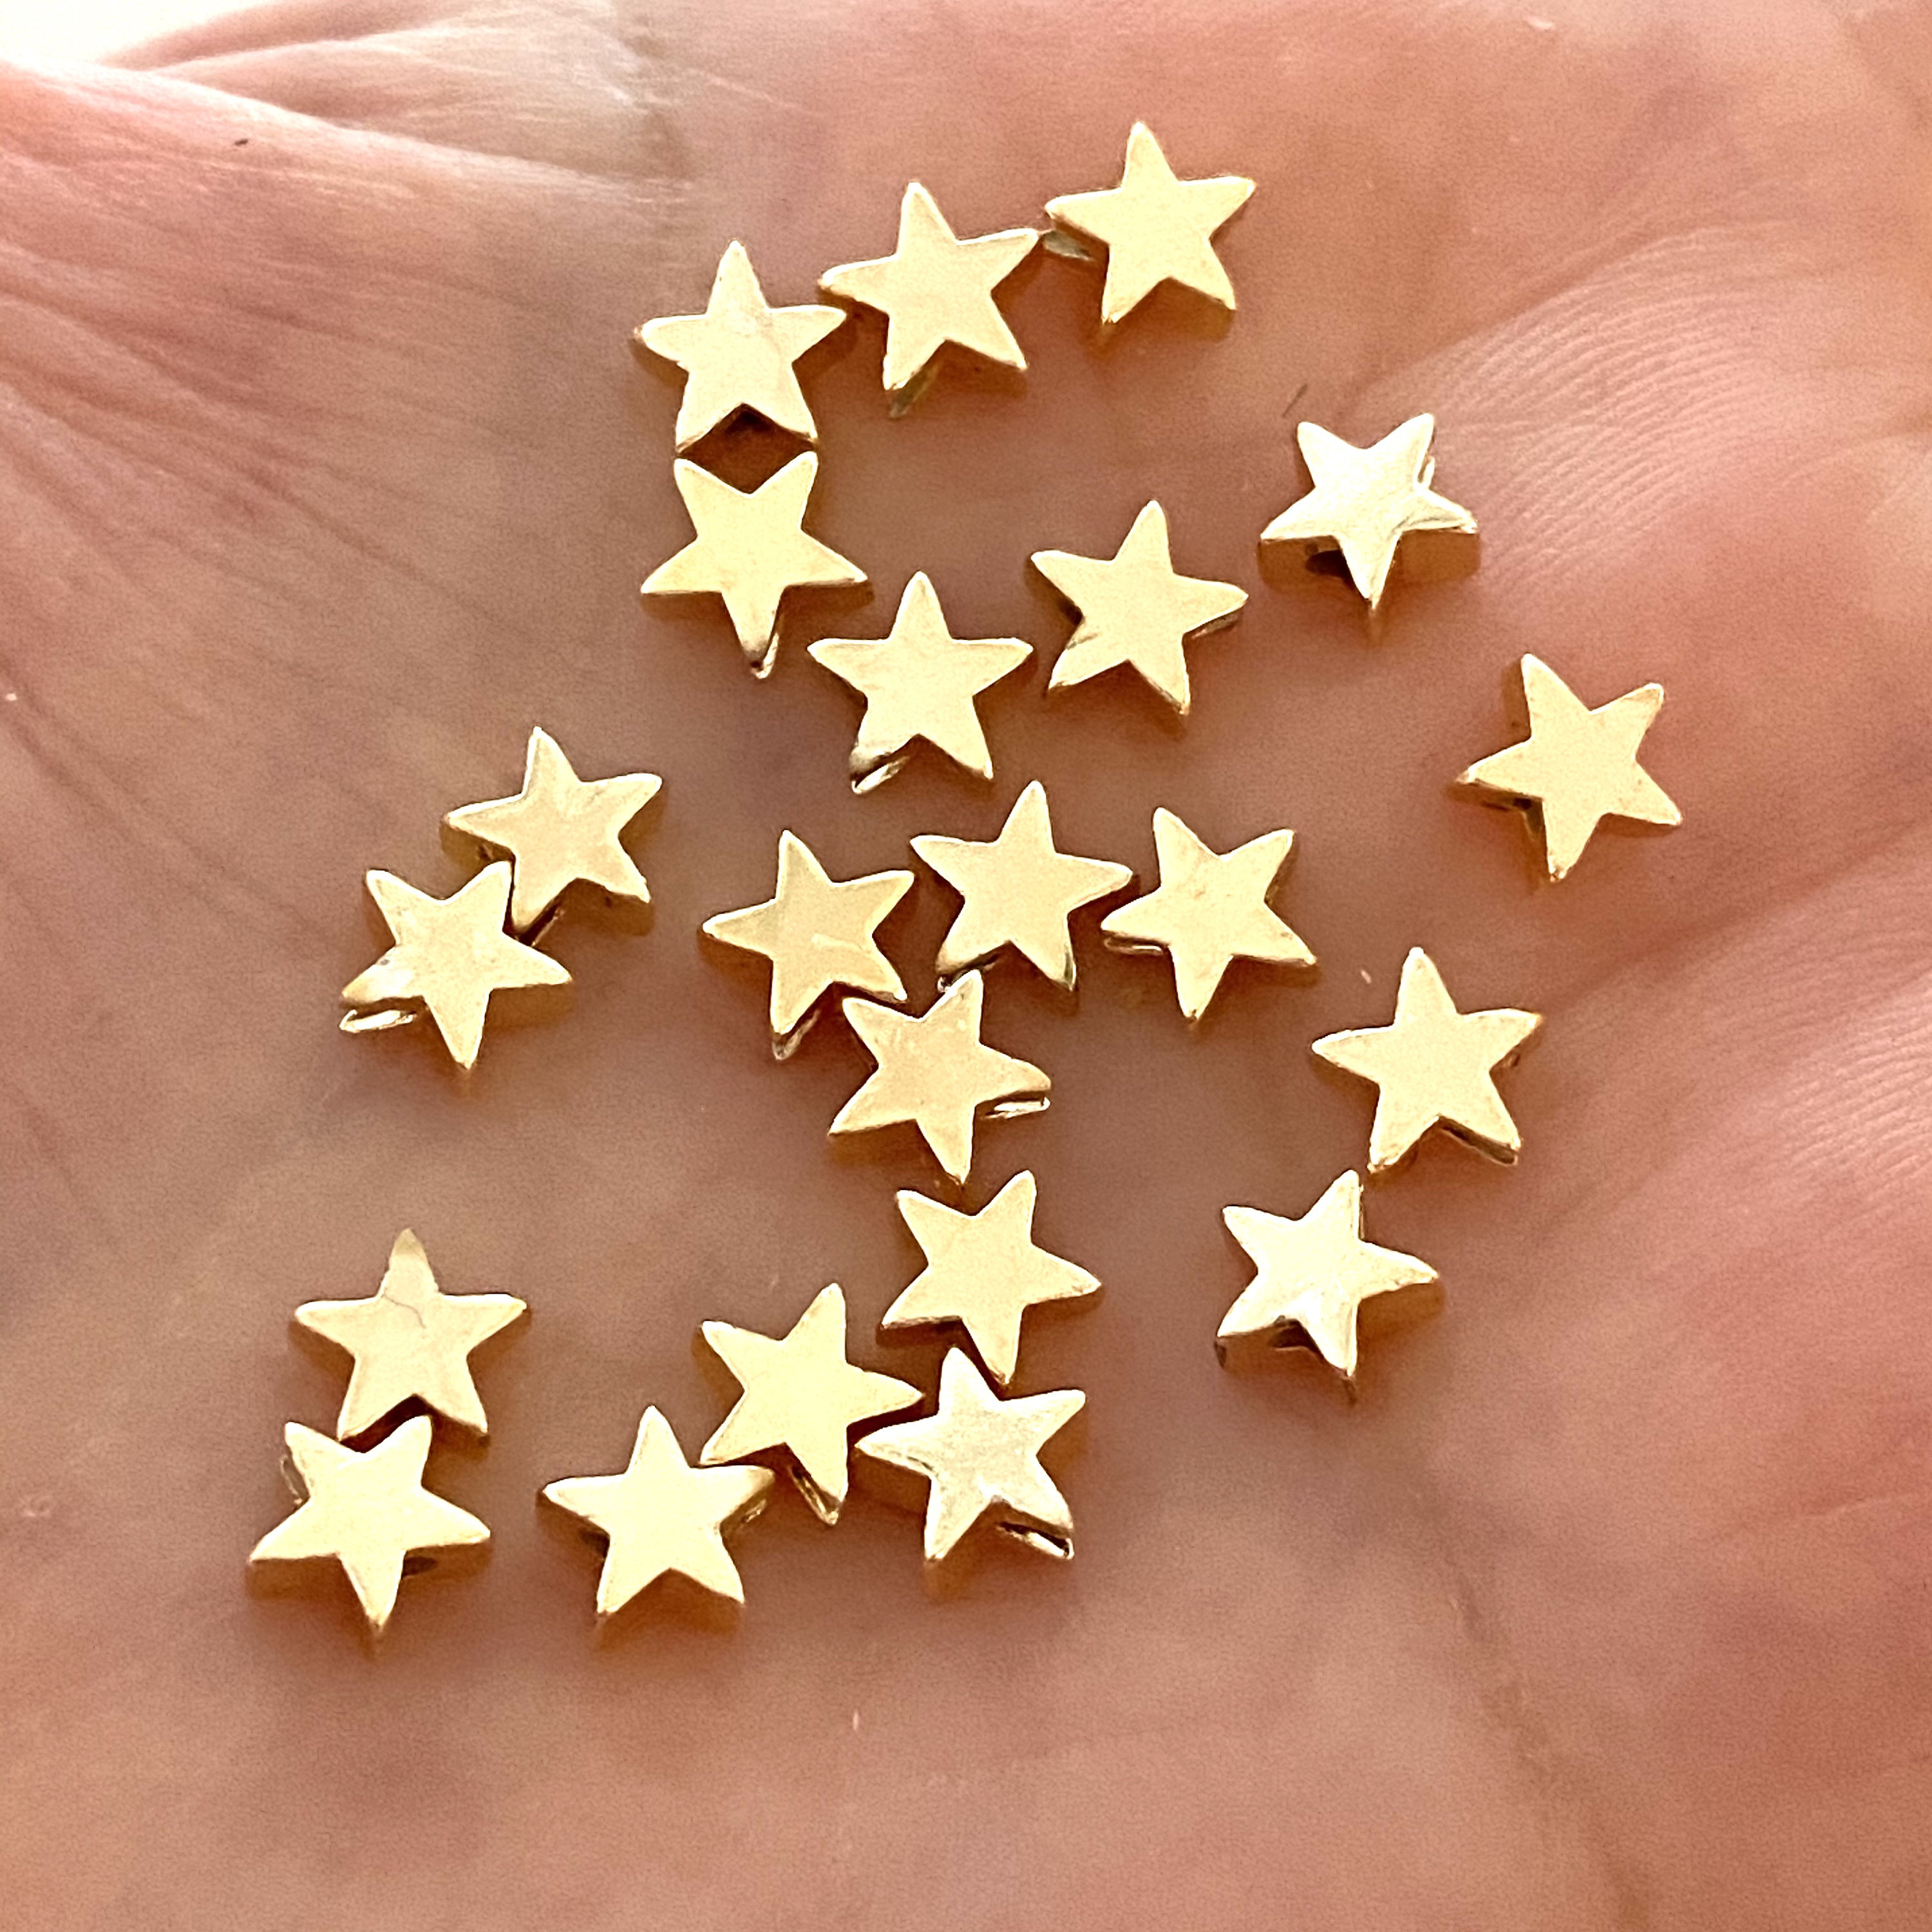 14 K Gold Filled Star Charms, 10 mm 925 Sterling Silver Soldered